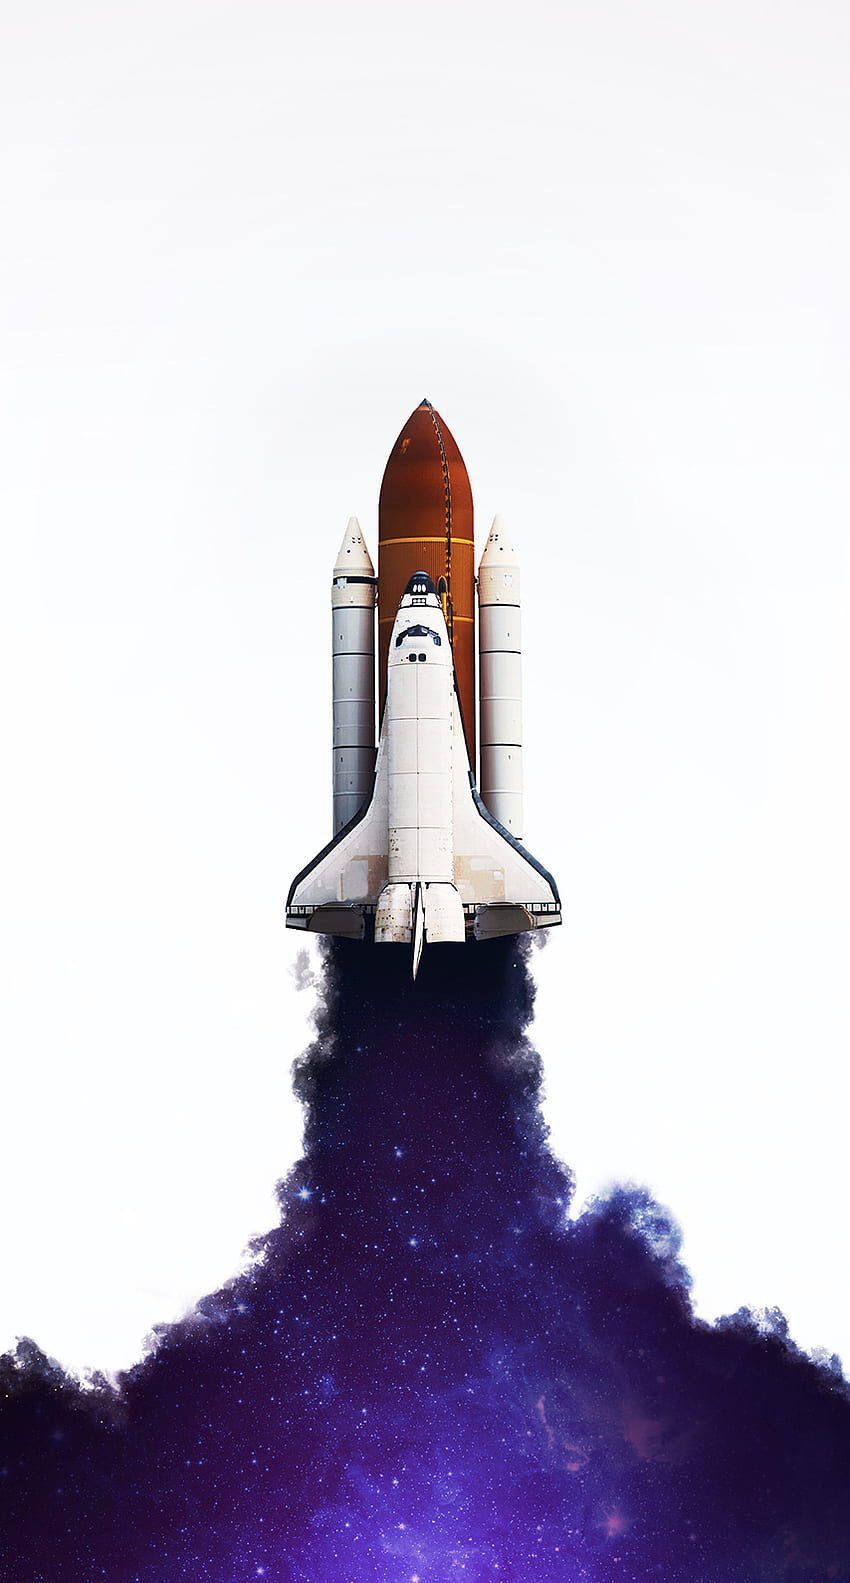 Space Shuttle Atlantis in orbit wallpaper - Space wallpapers - #42196